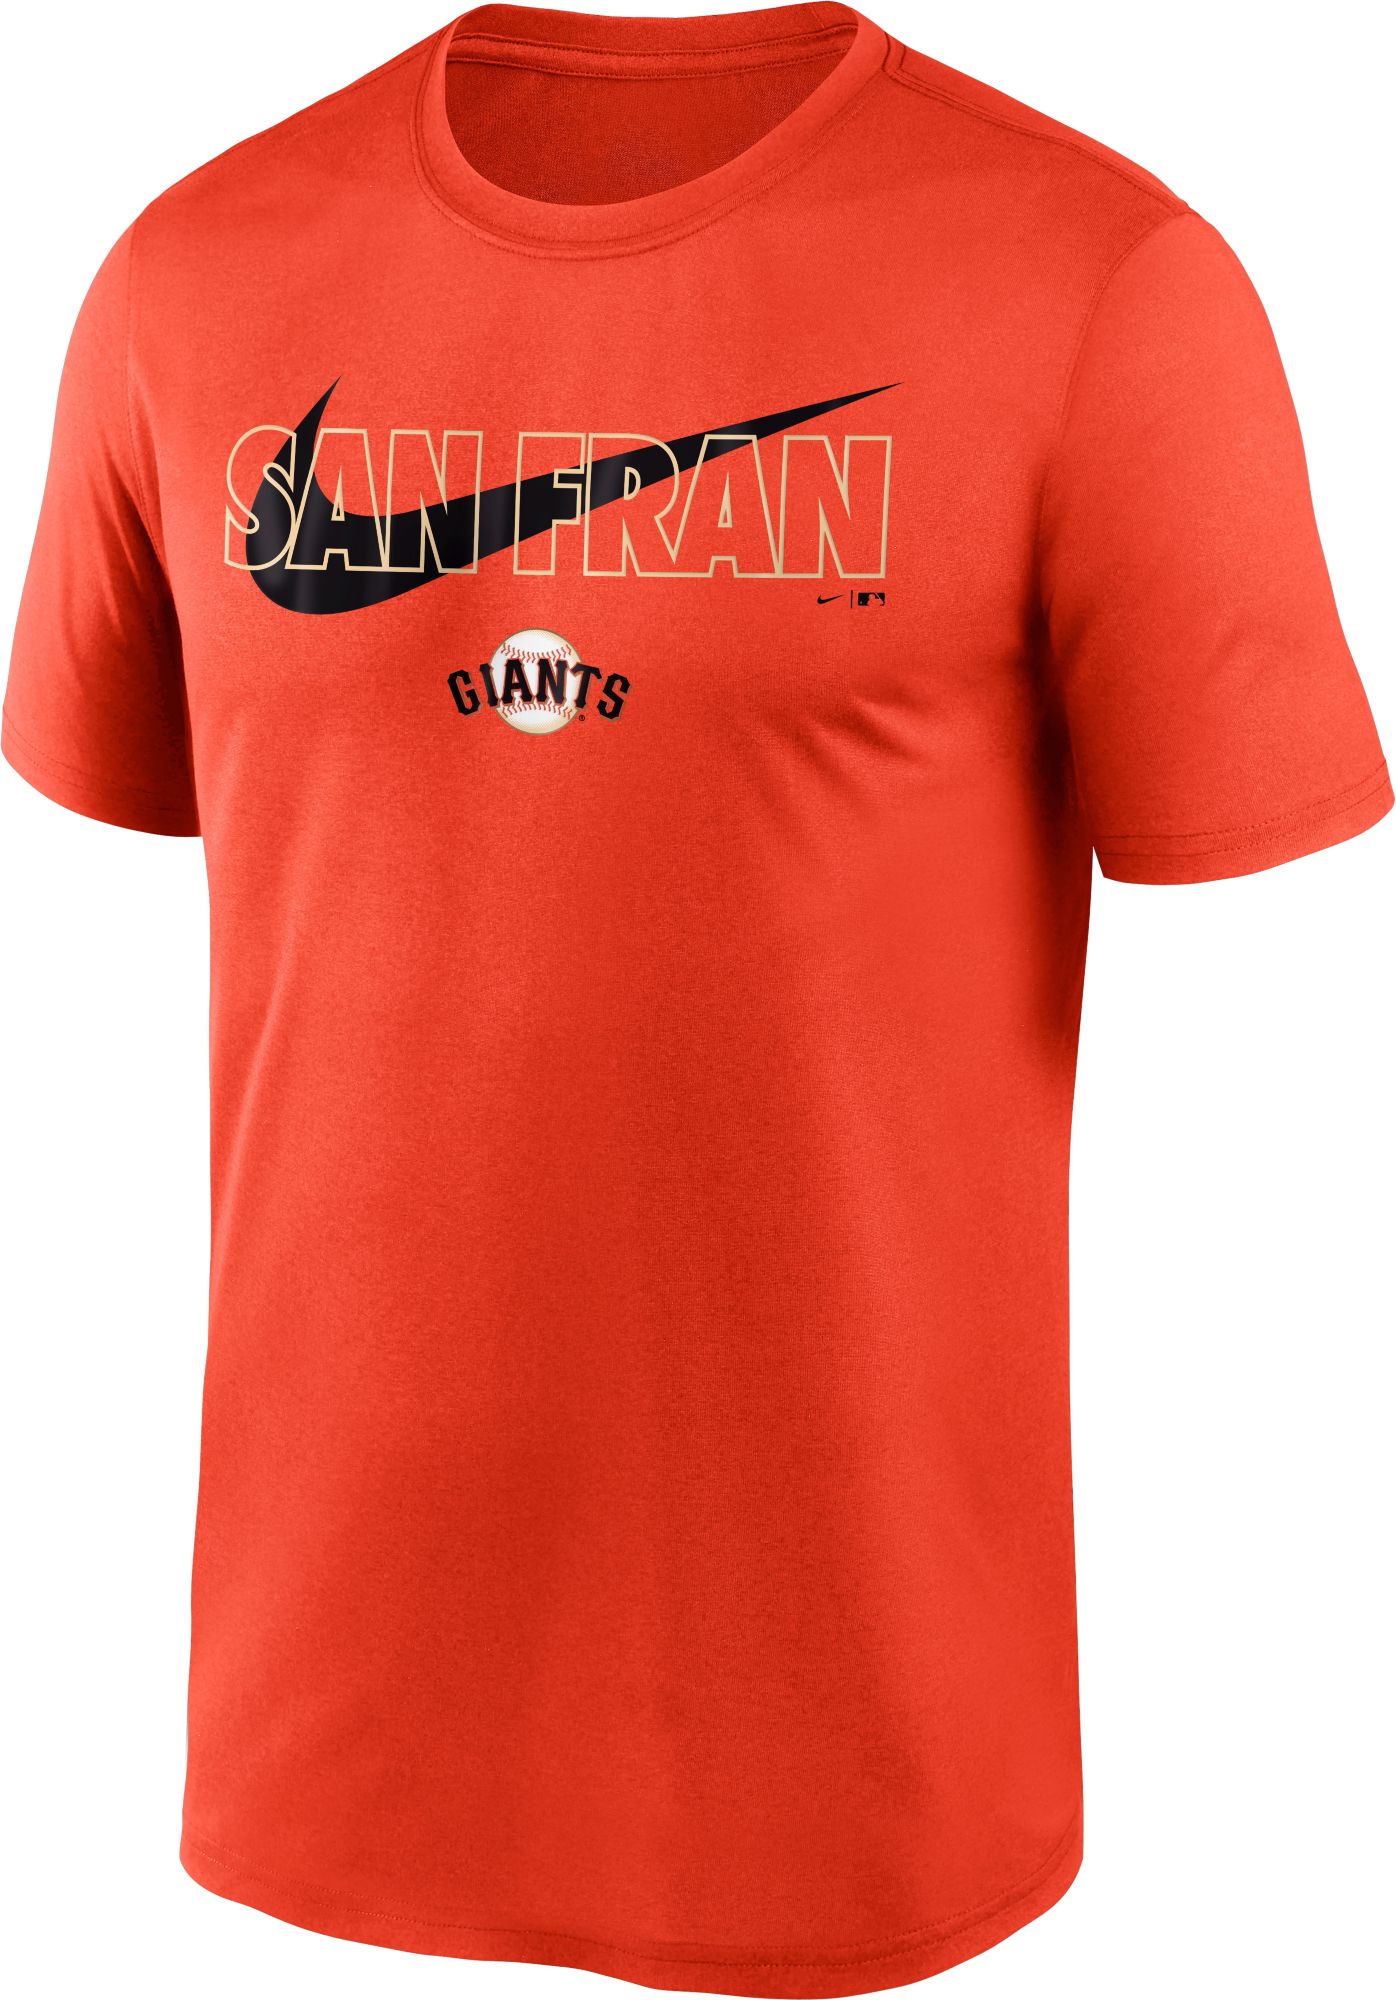 Nike / Men's Milwaukee Brewers Grey Logo Legend T-Shirt